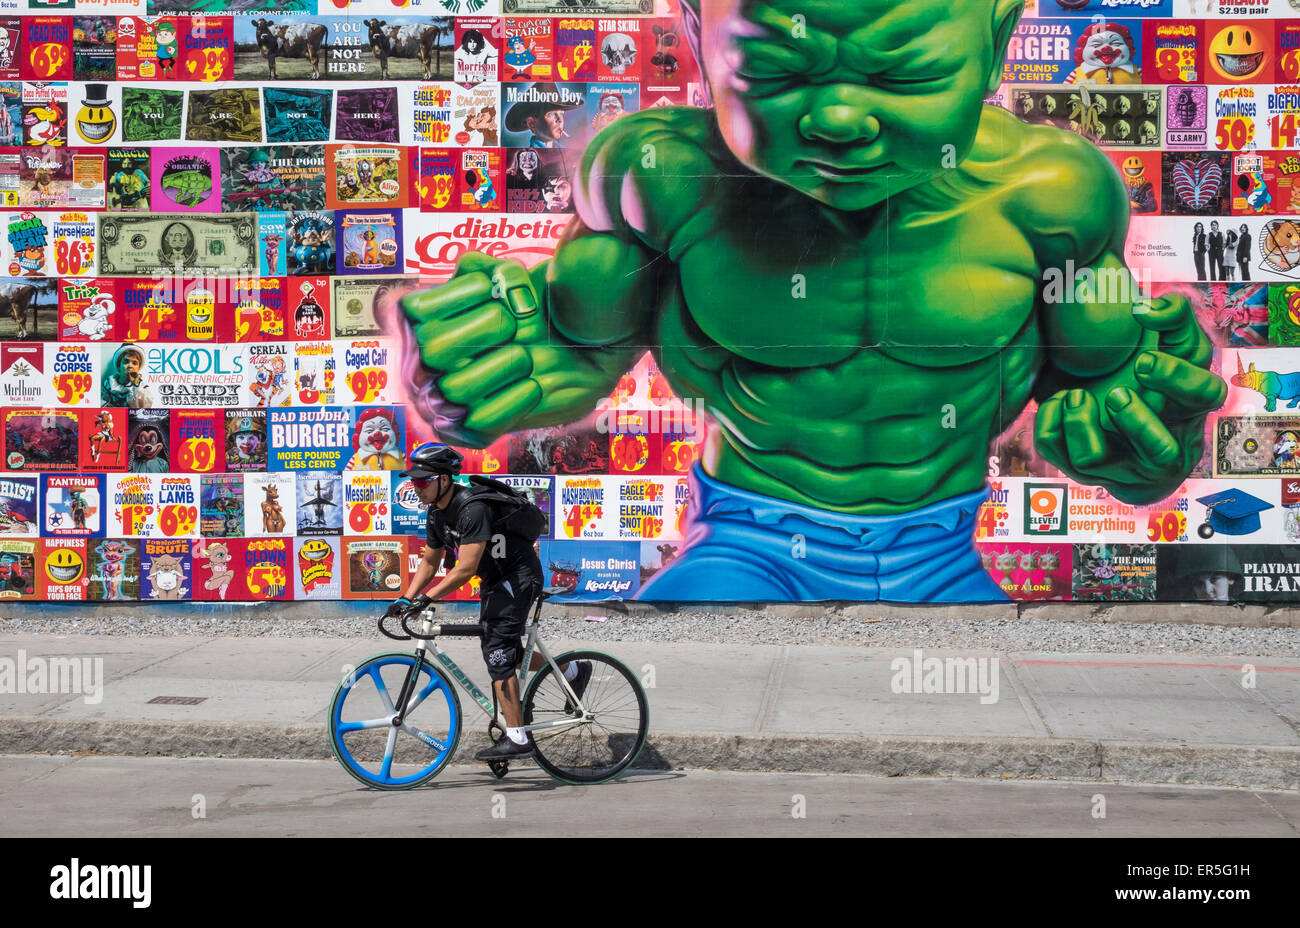 Ron's Englisch Houston Bowery Wand mit grünen Hulk baby Nolita, New York City. NYC Graffiti Stockfoto